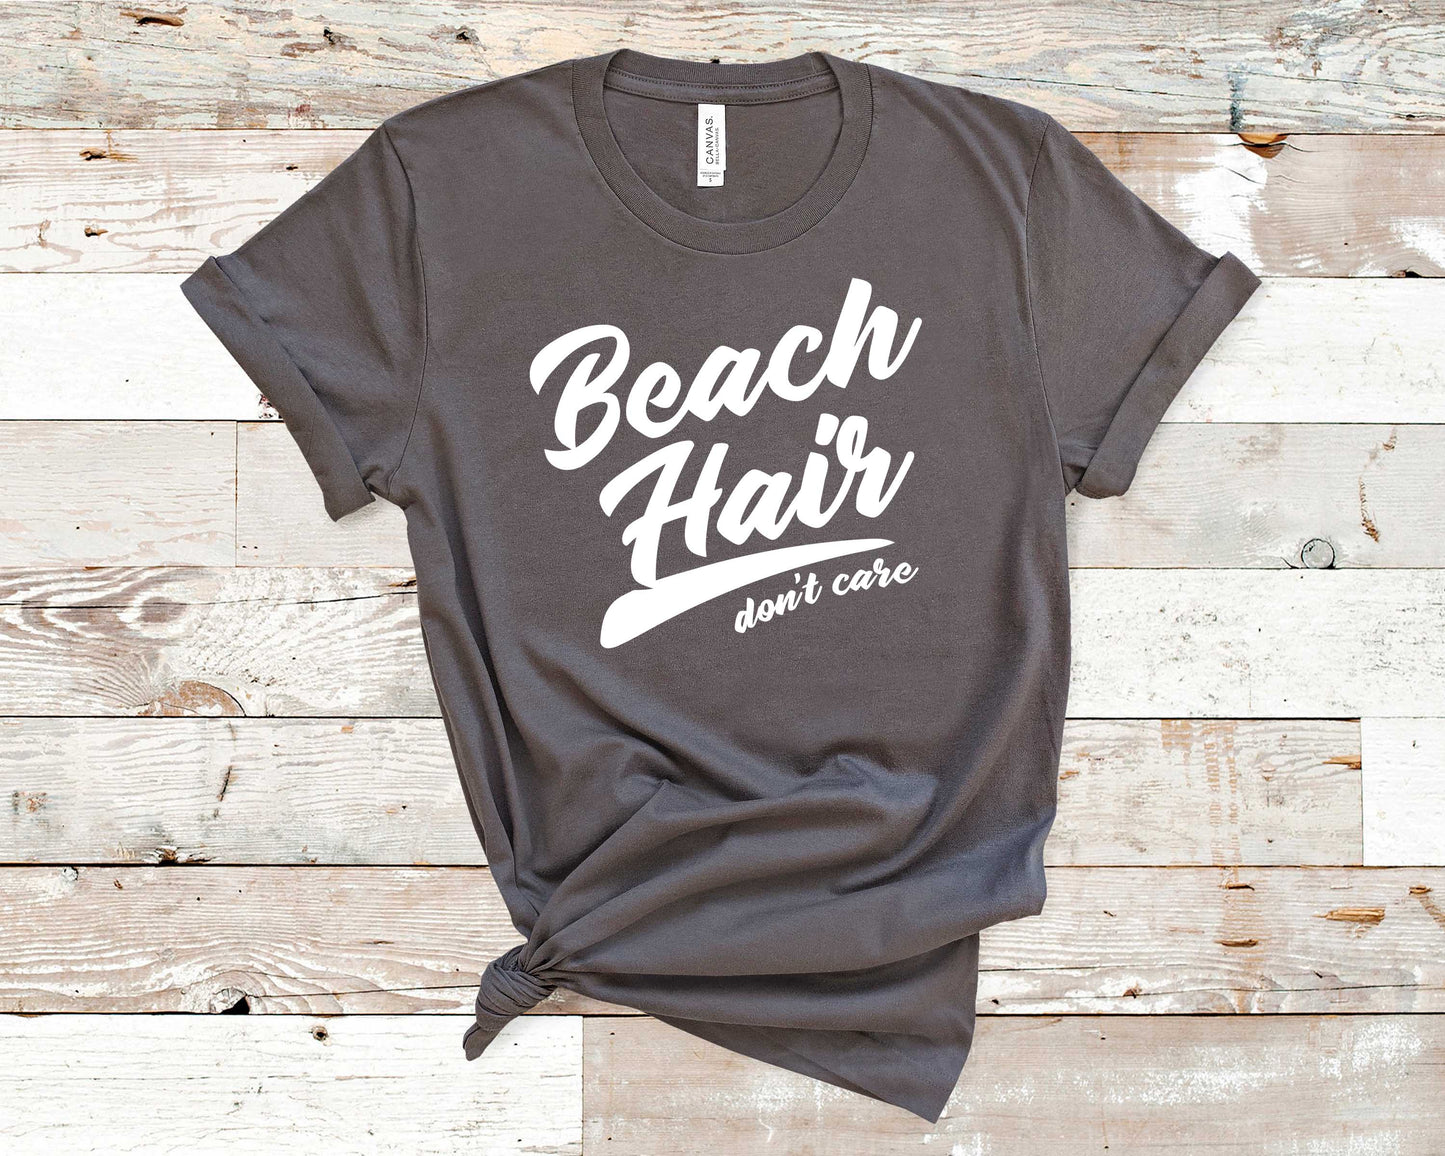 Beach Hair Don't Care - Travel/Vacation